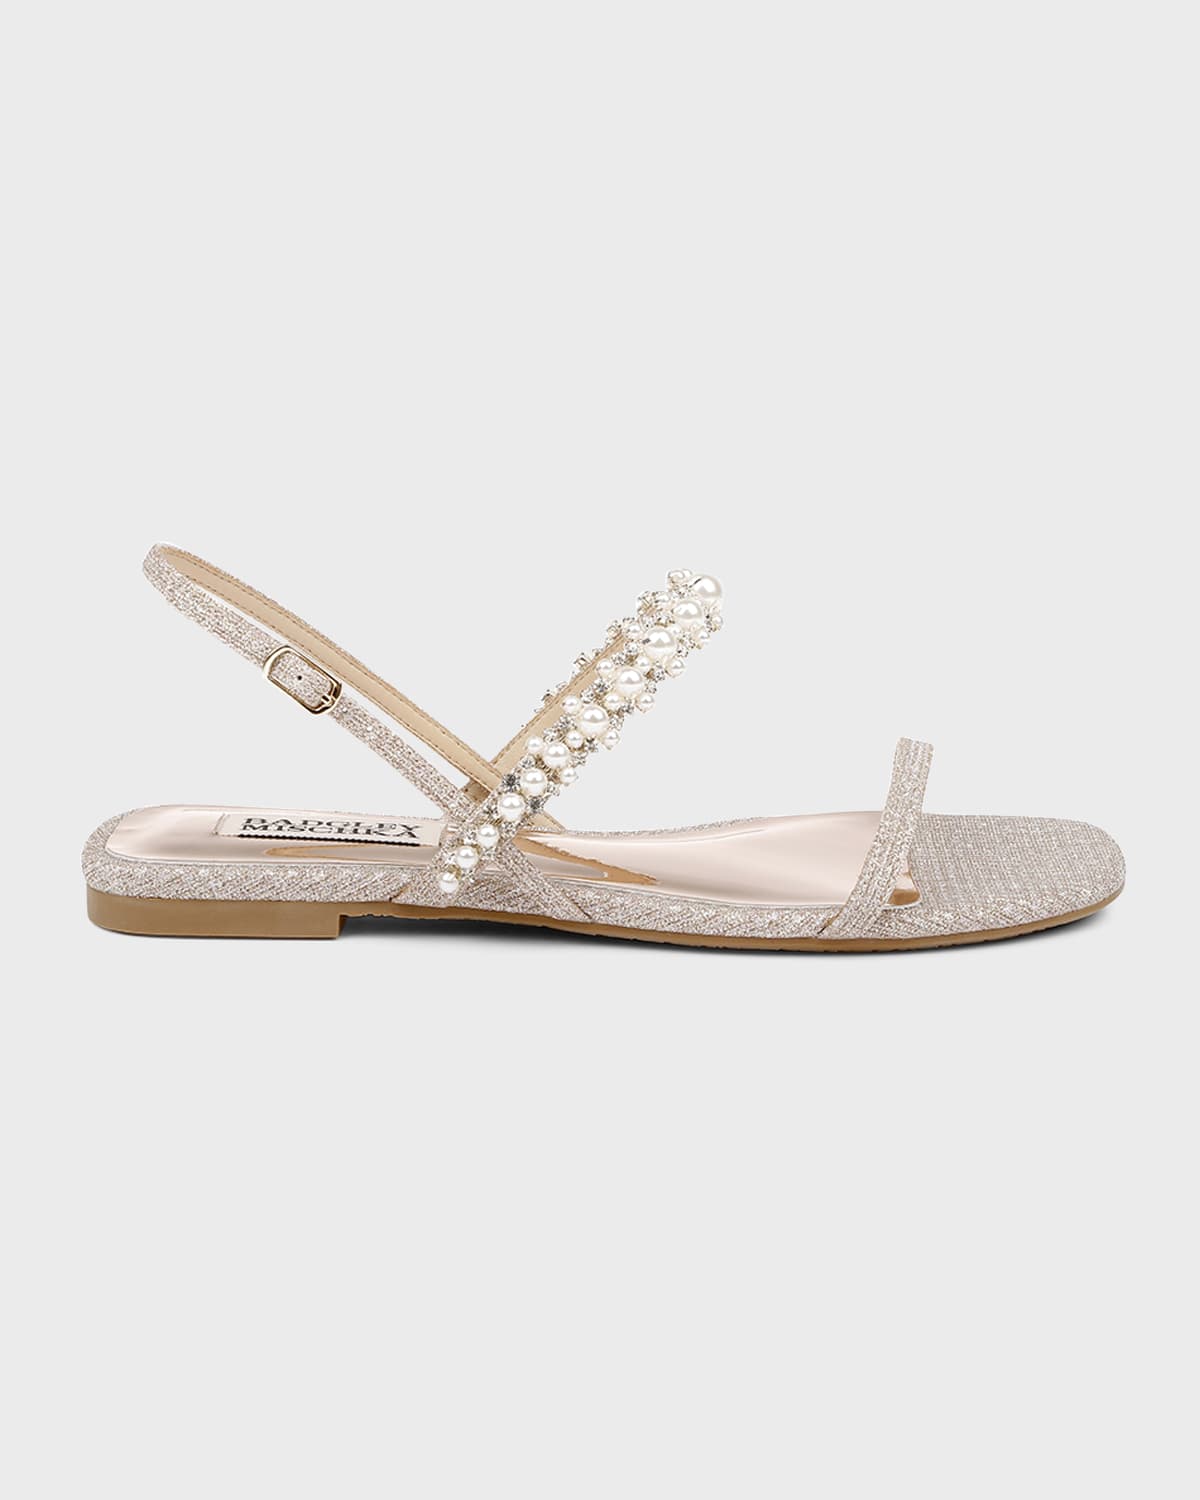 Badgley Mischka Natalee Crystal Glitter Slingback Sandals